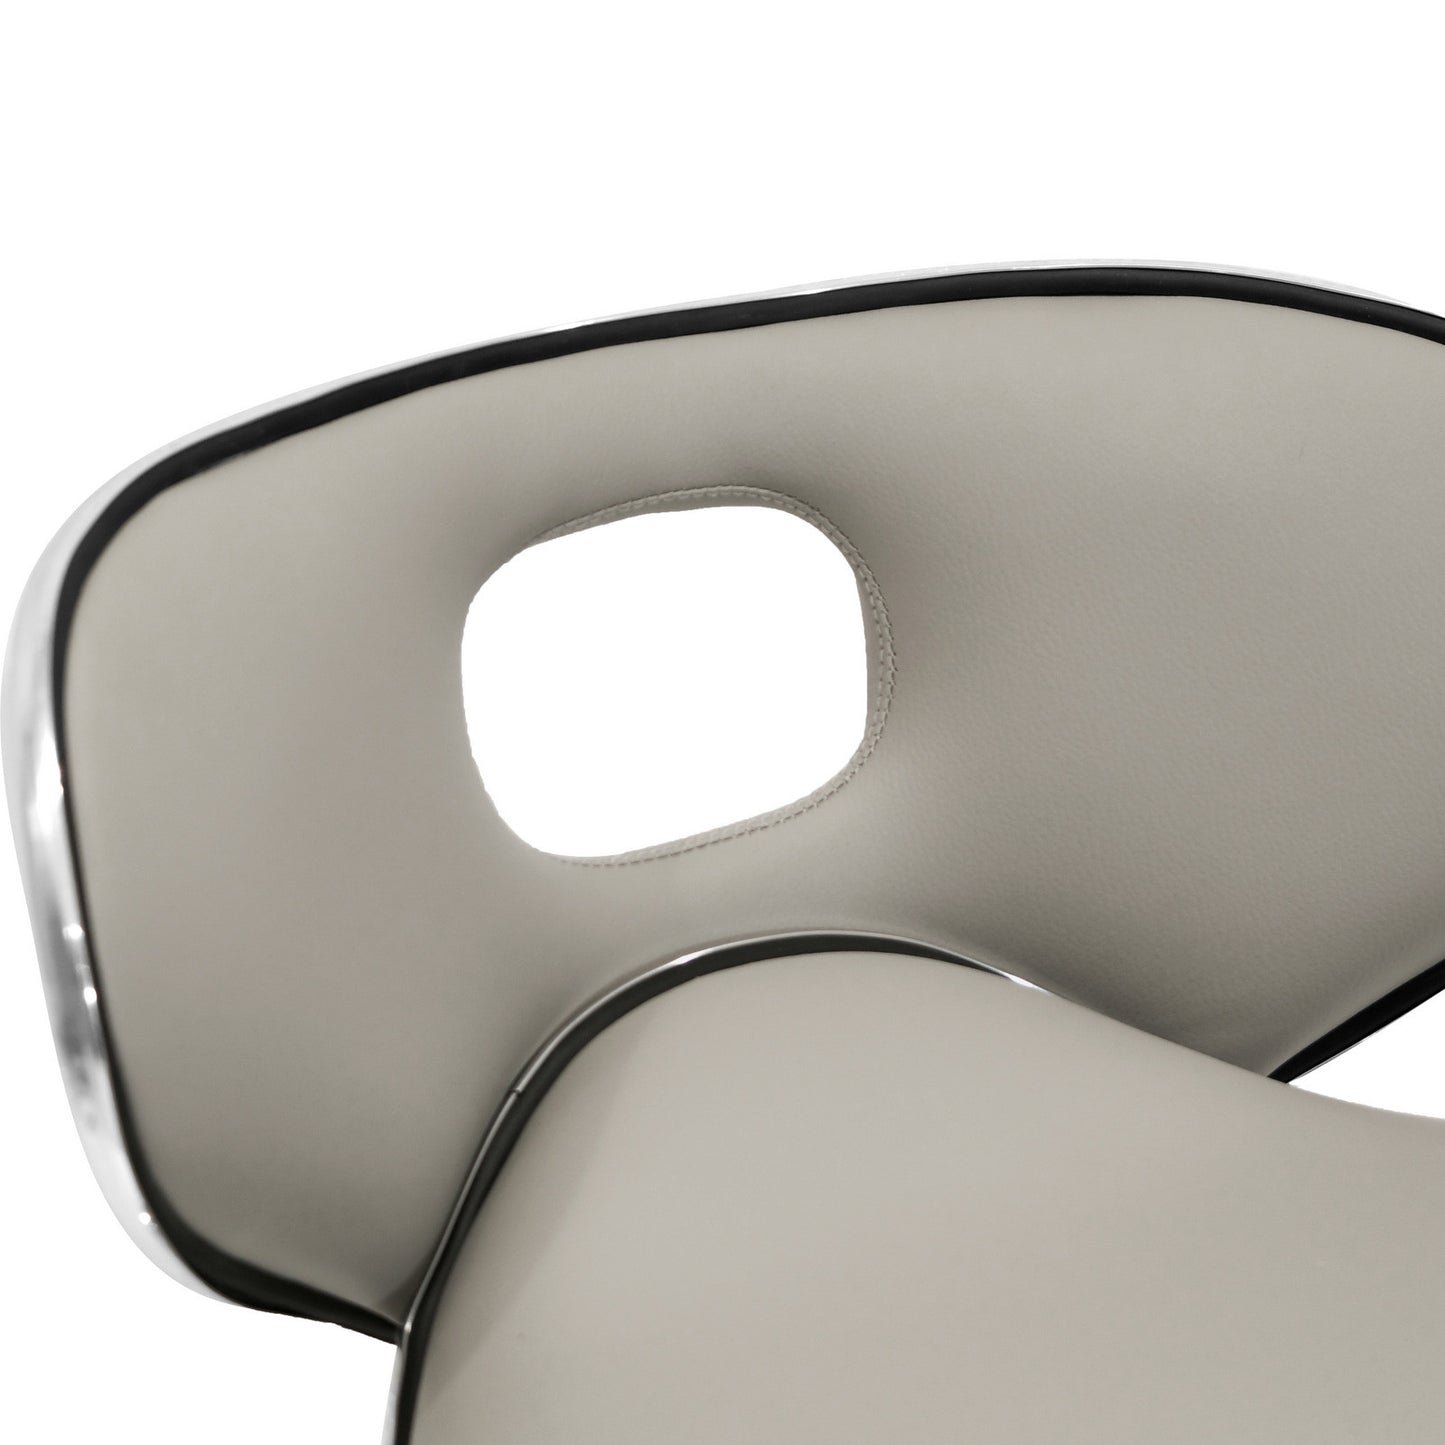 Adria Ash Color Light Taupe PU Leather Chrome Frame Adjustable Height Swivel Bar Stool (Set of 2)